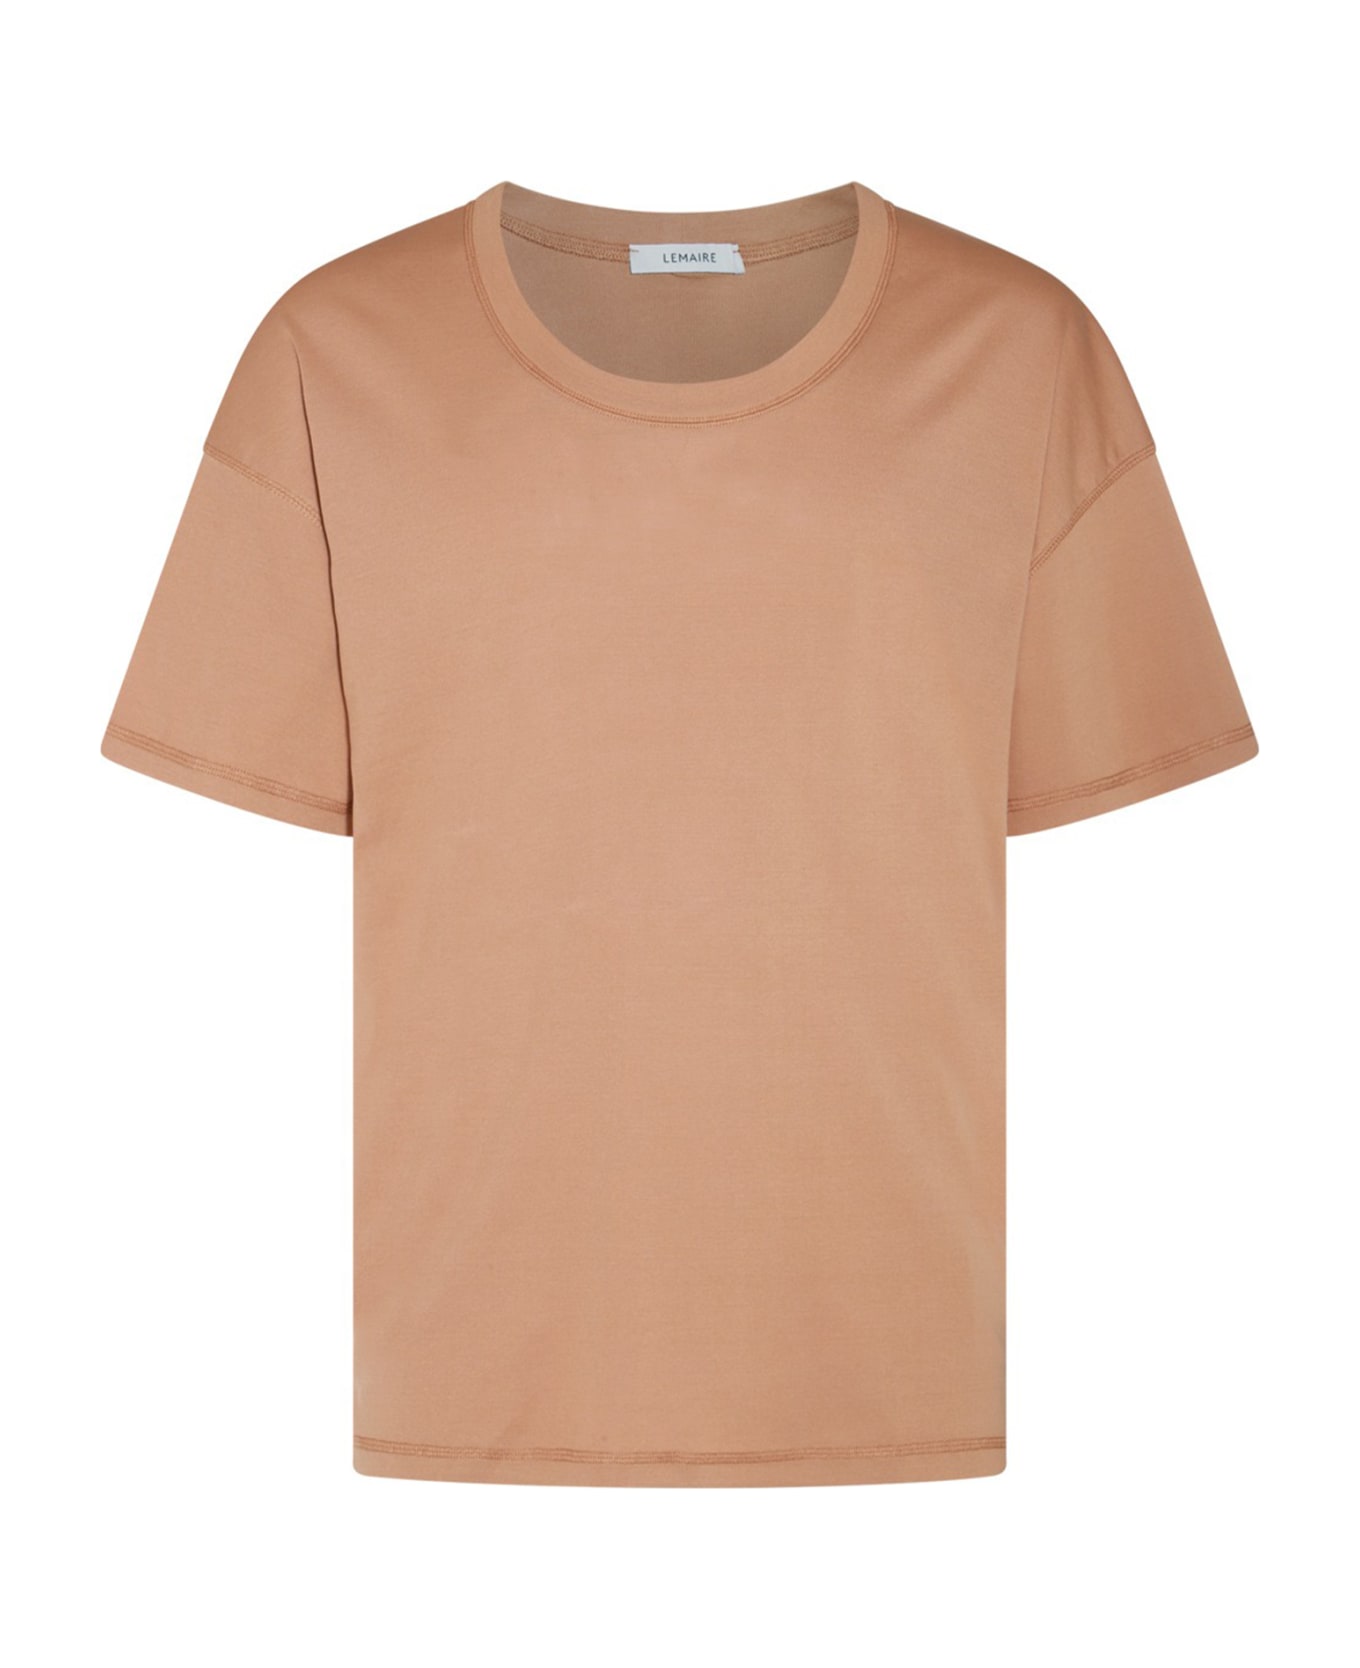 Lemaire T-Shirt - SAND